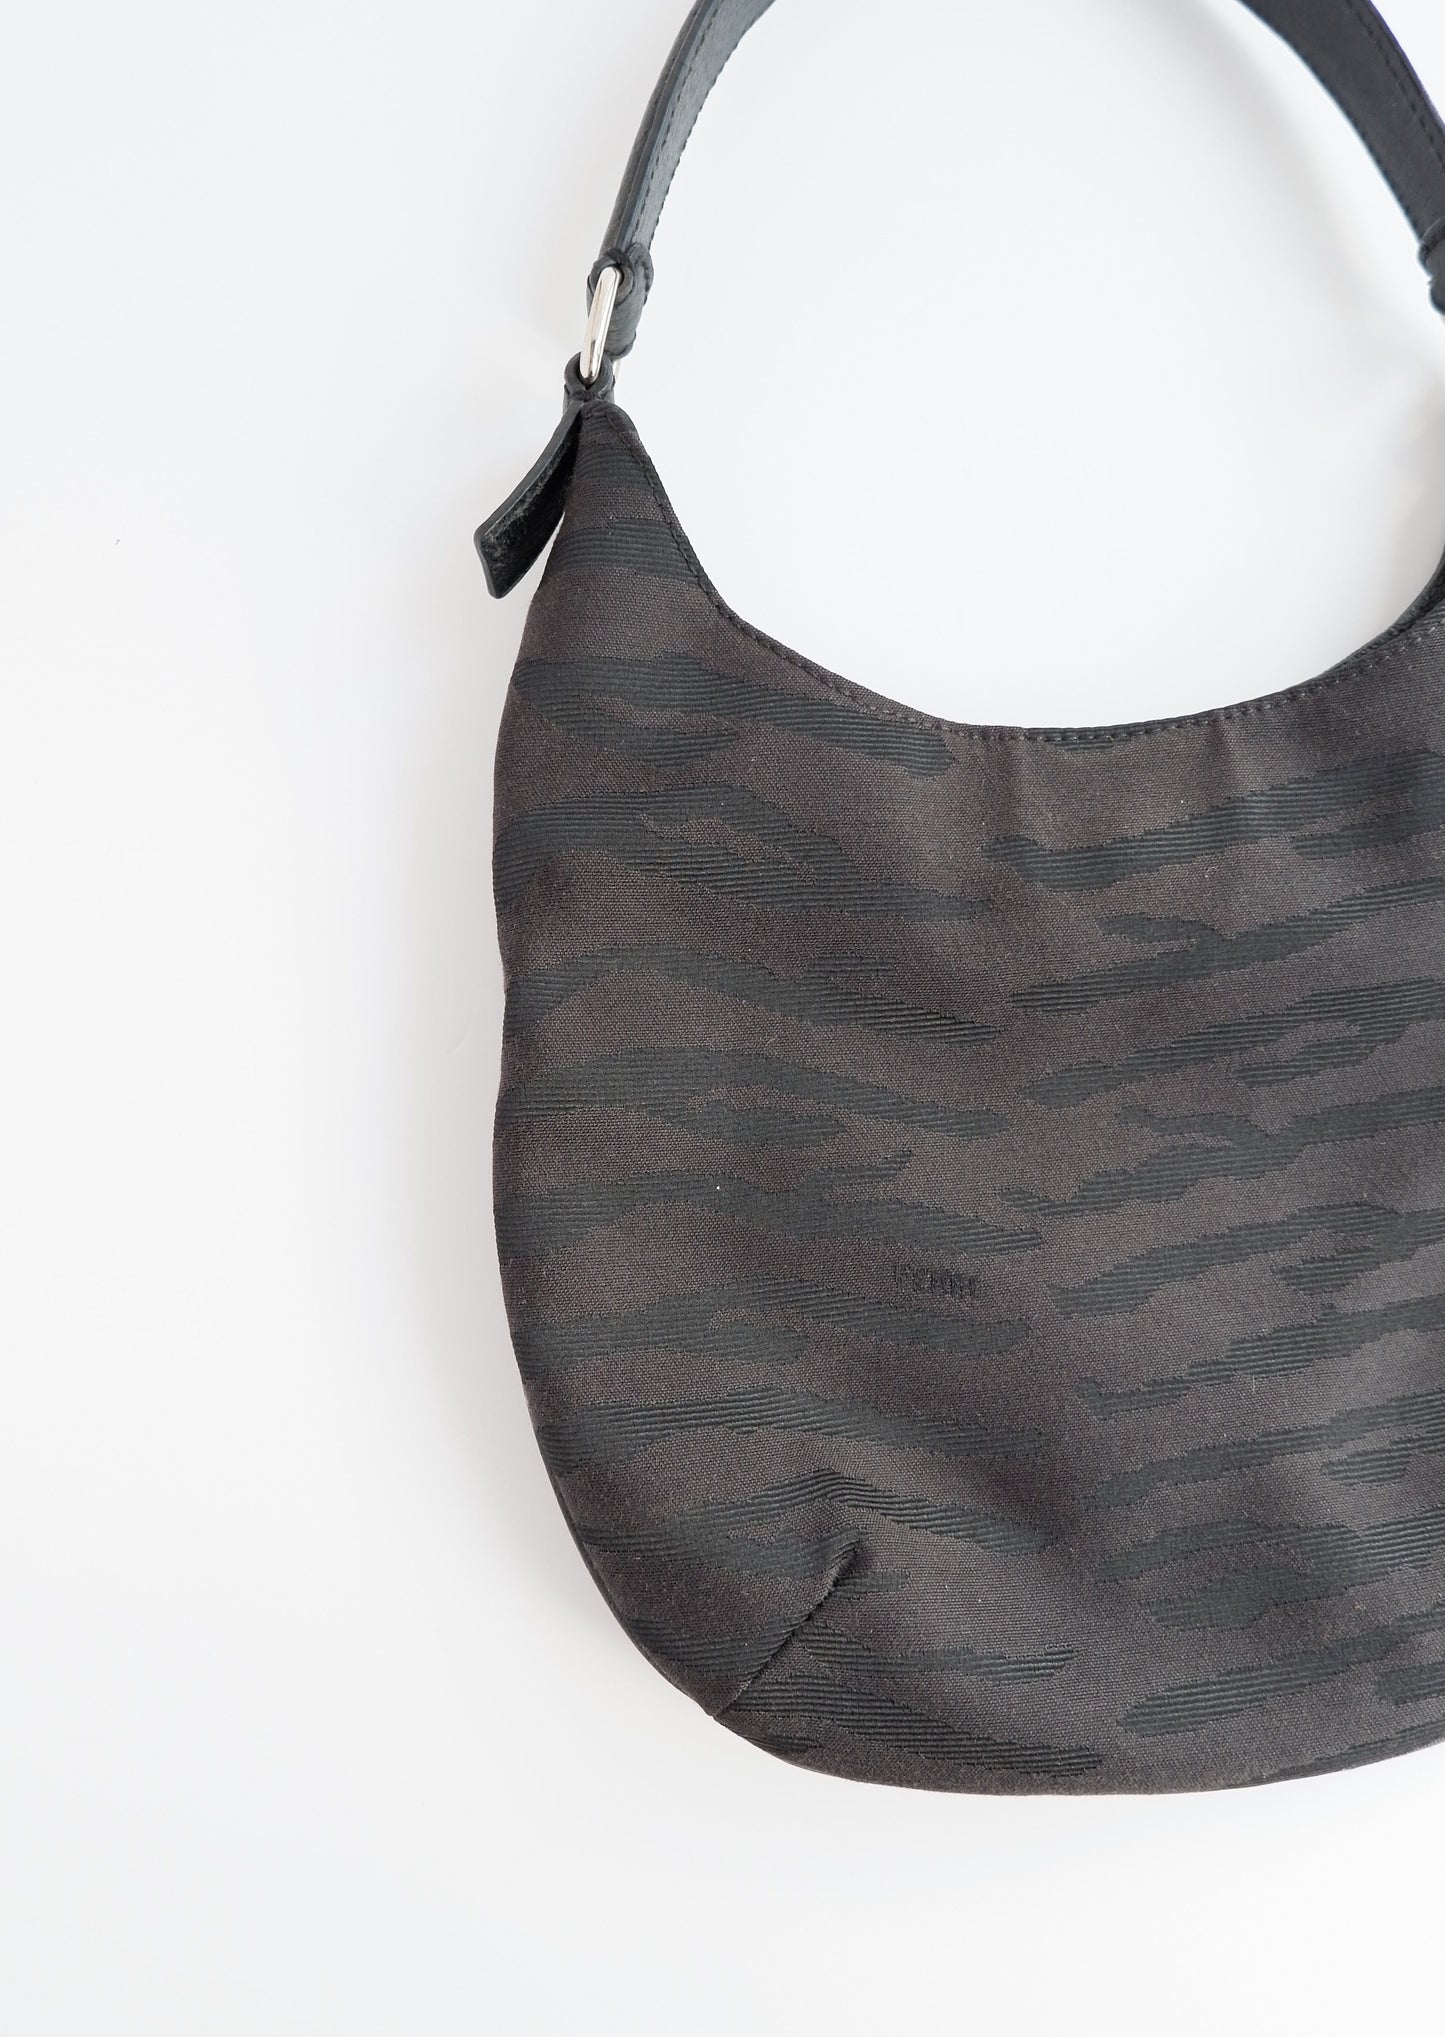 Authentic Preowned Fendi Black Canvas Animal Print Hobo Bag